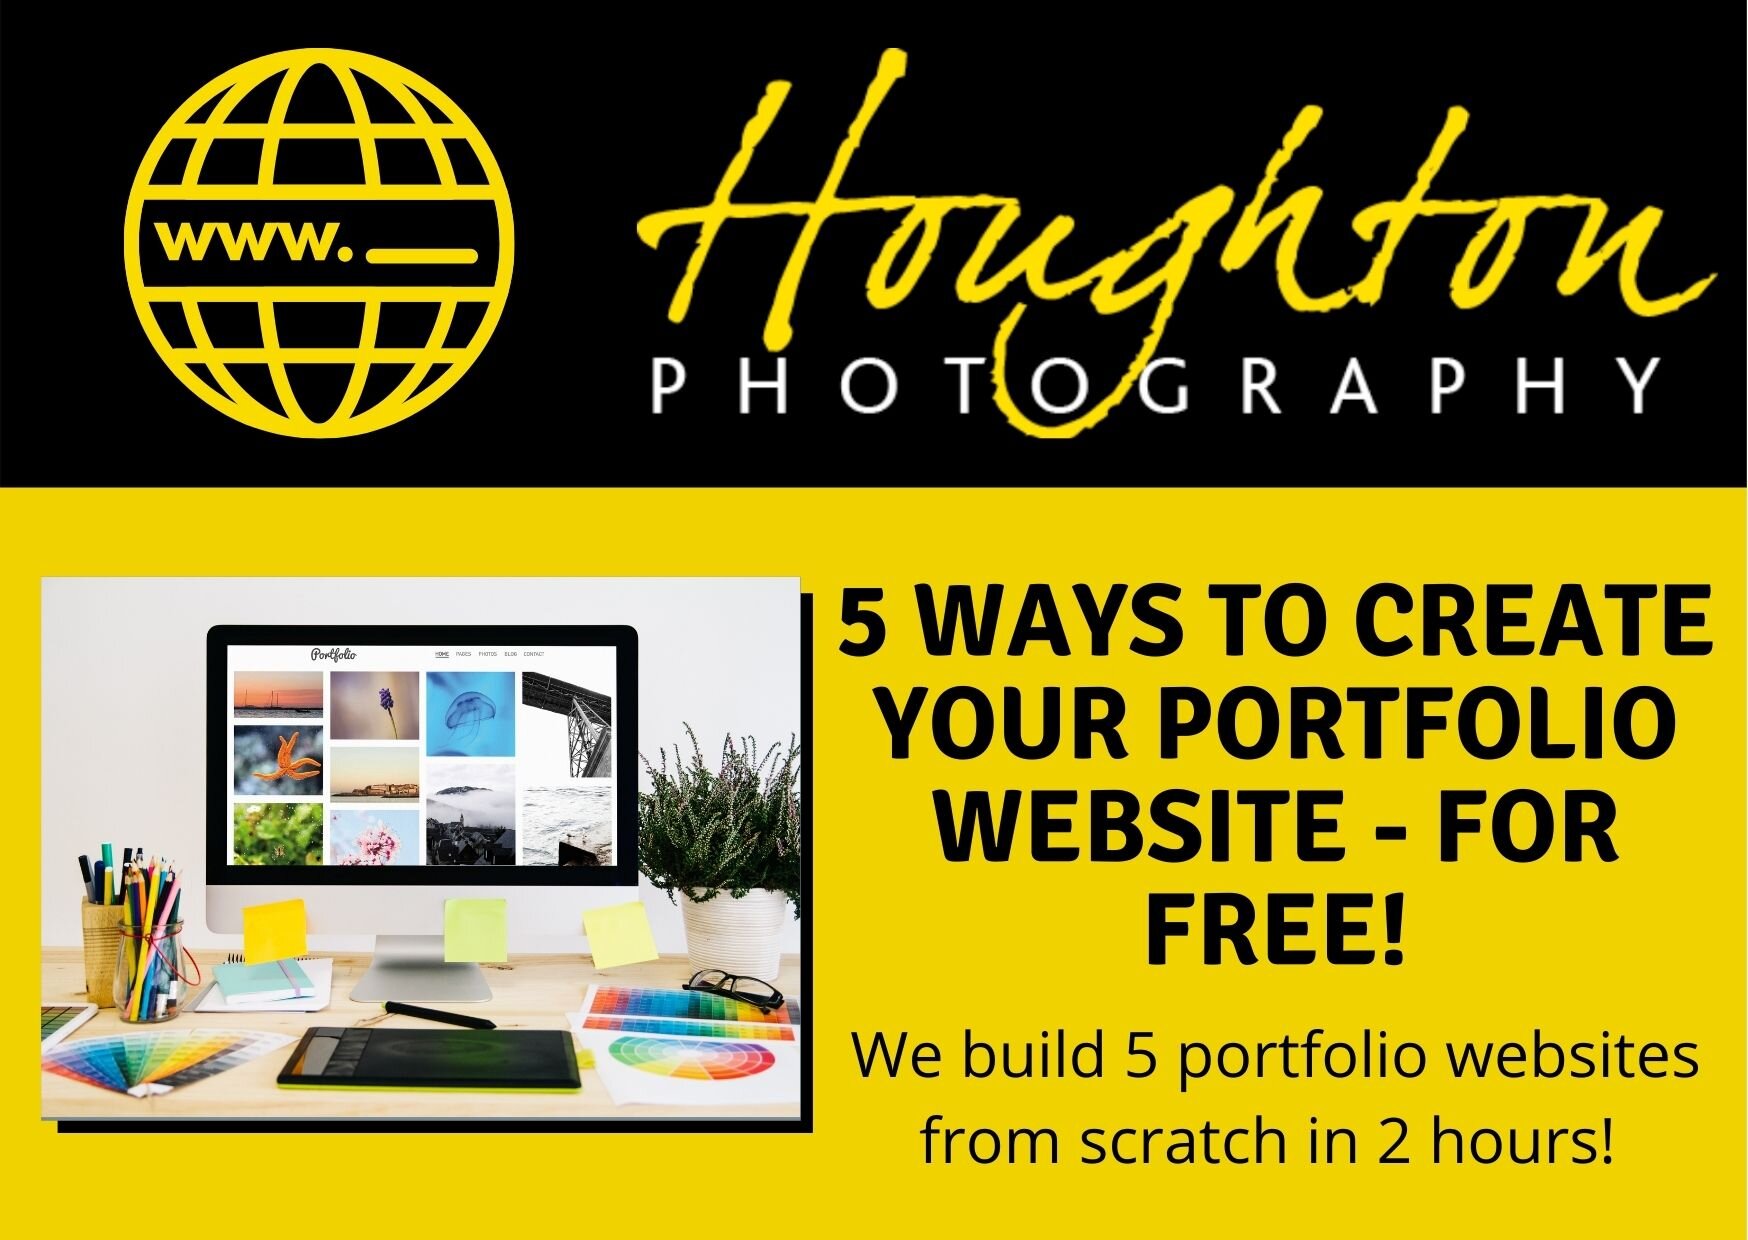 5 ways to create your portfolio website - for free!